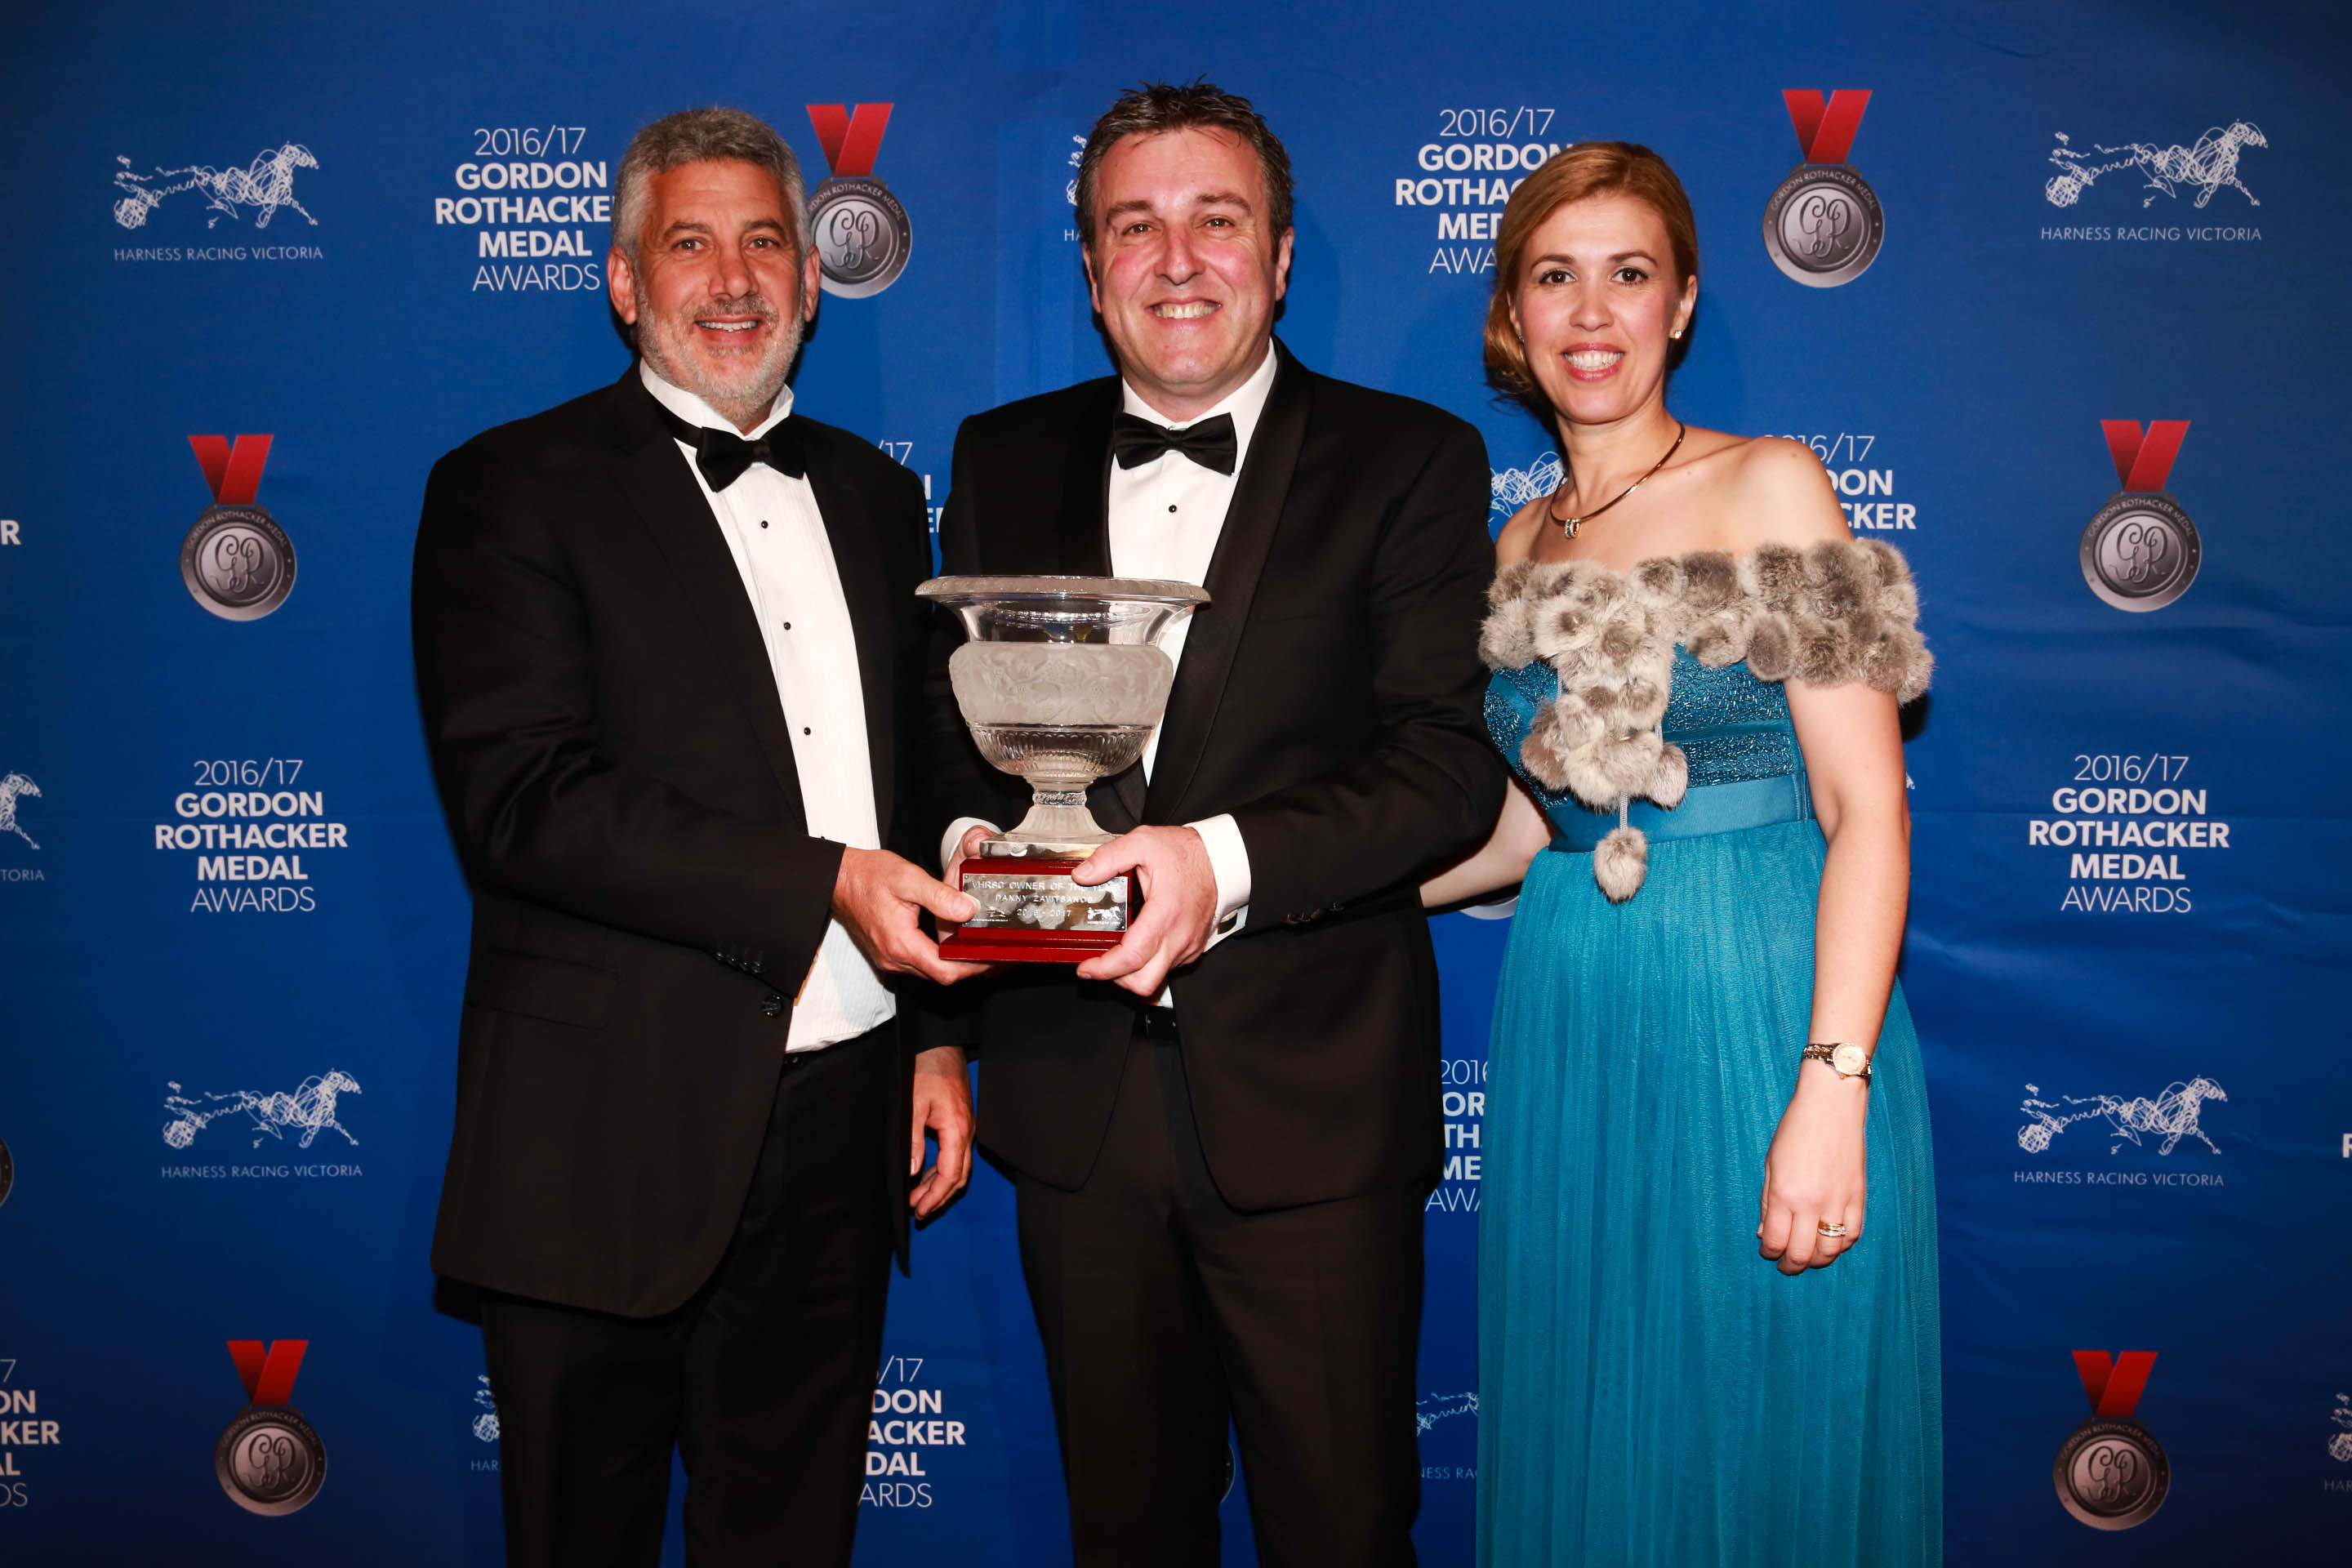 2016/17 VHRC Owner of the Year Award at the Gordon Rothacker Medal Night - winner Danny Zavitsanos